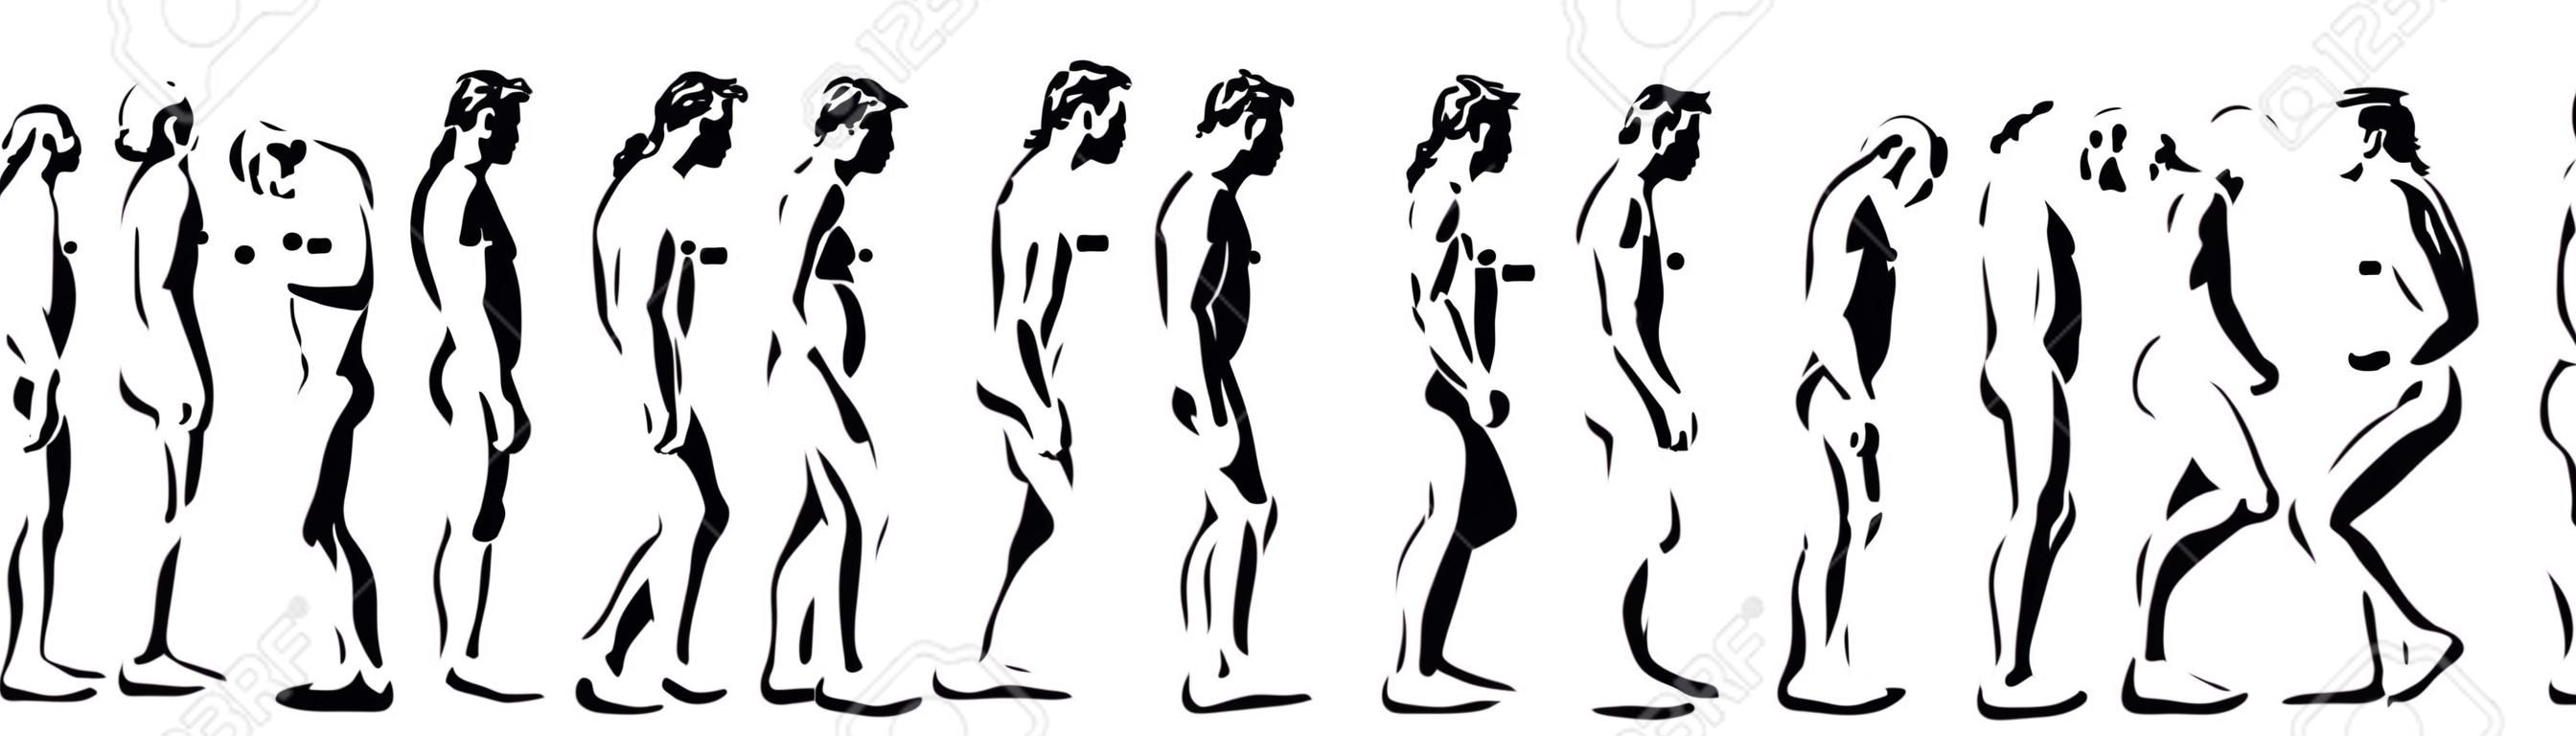 Human Evolution czas komputerowo ilustracji